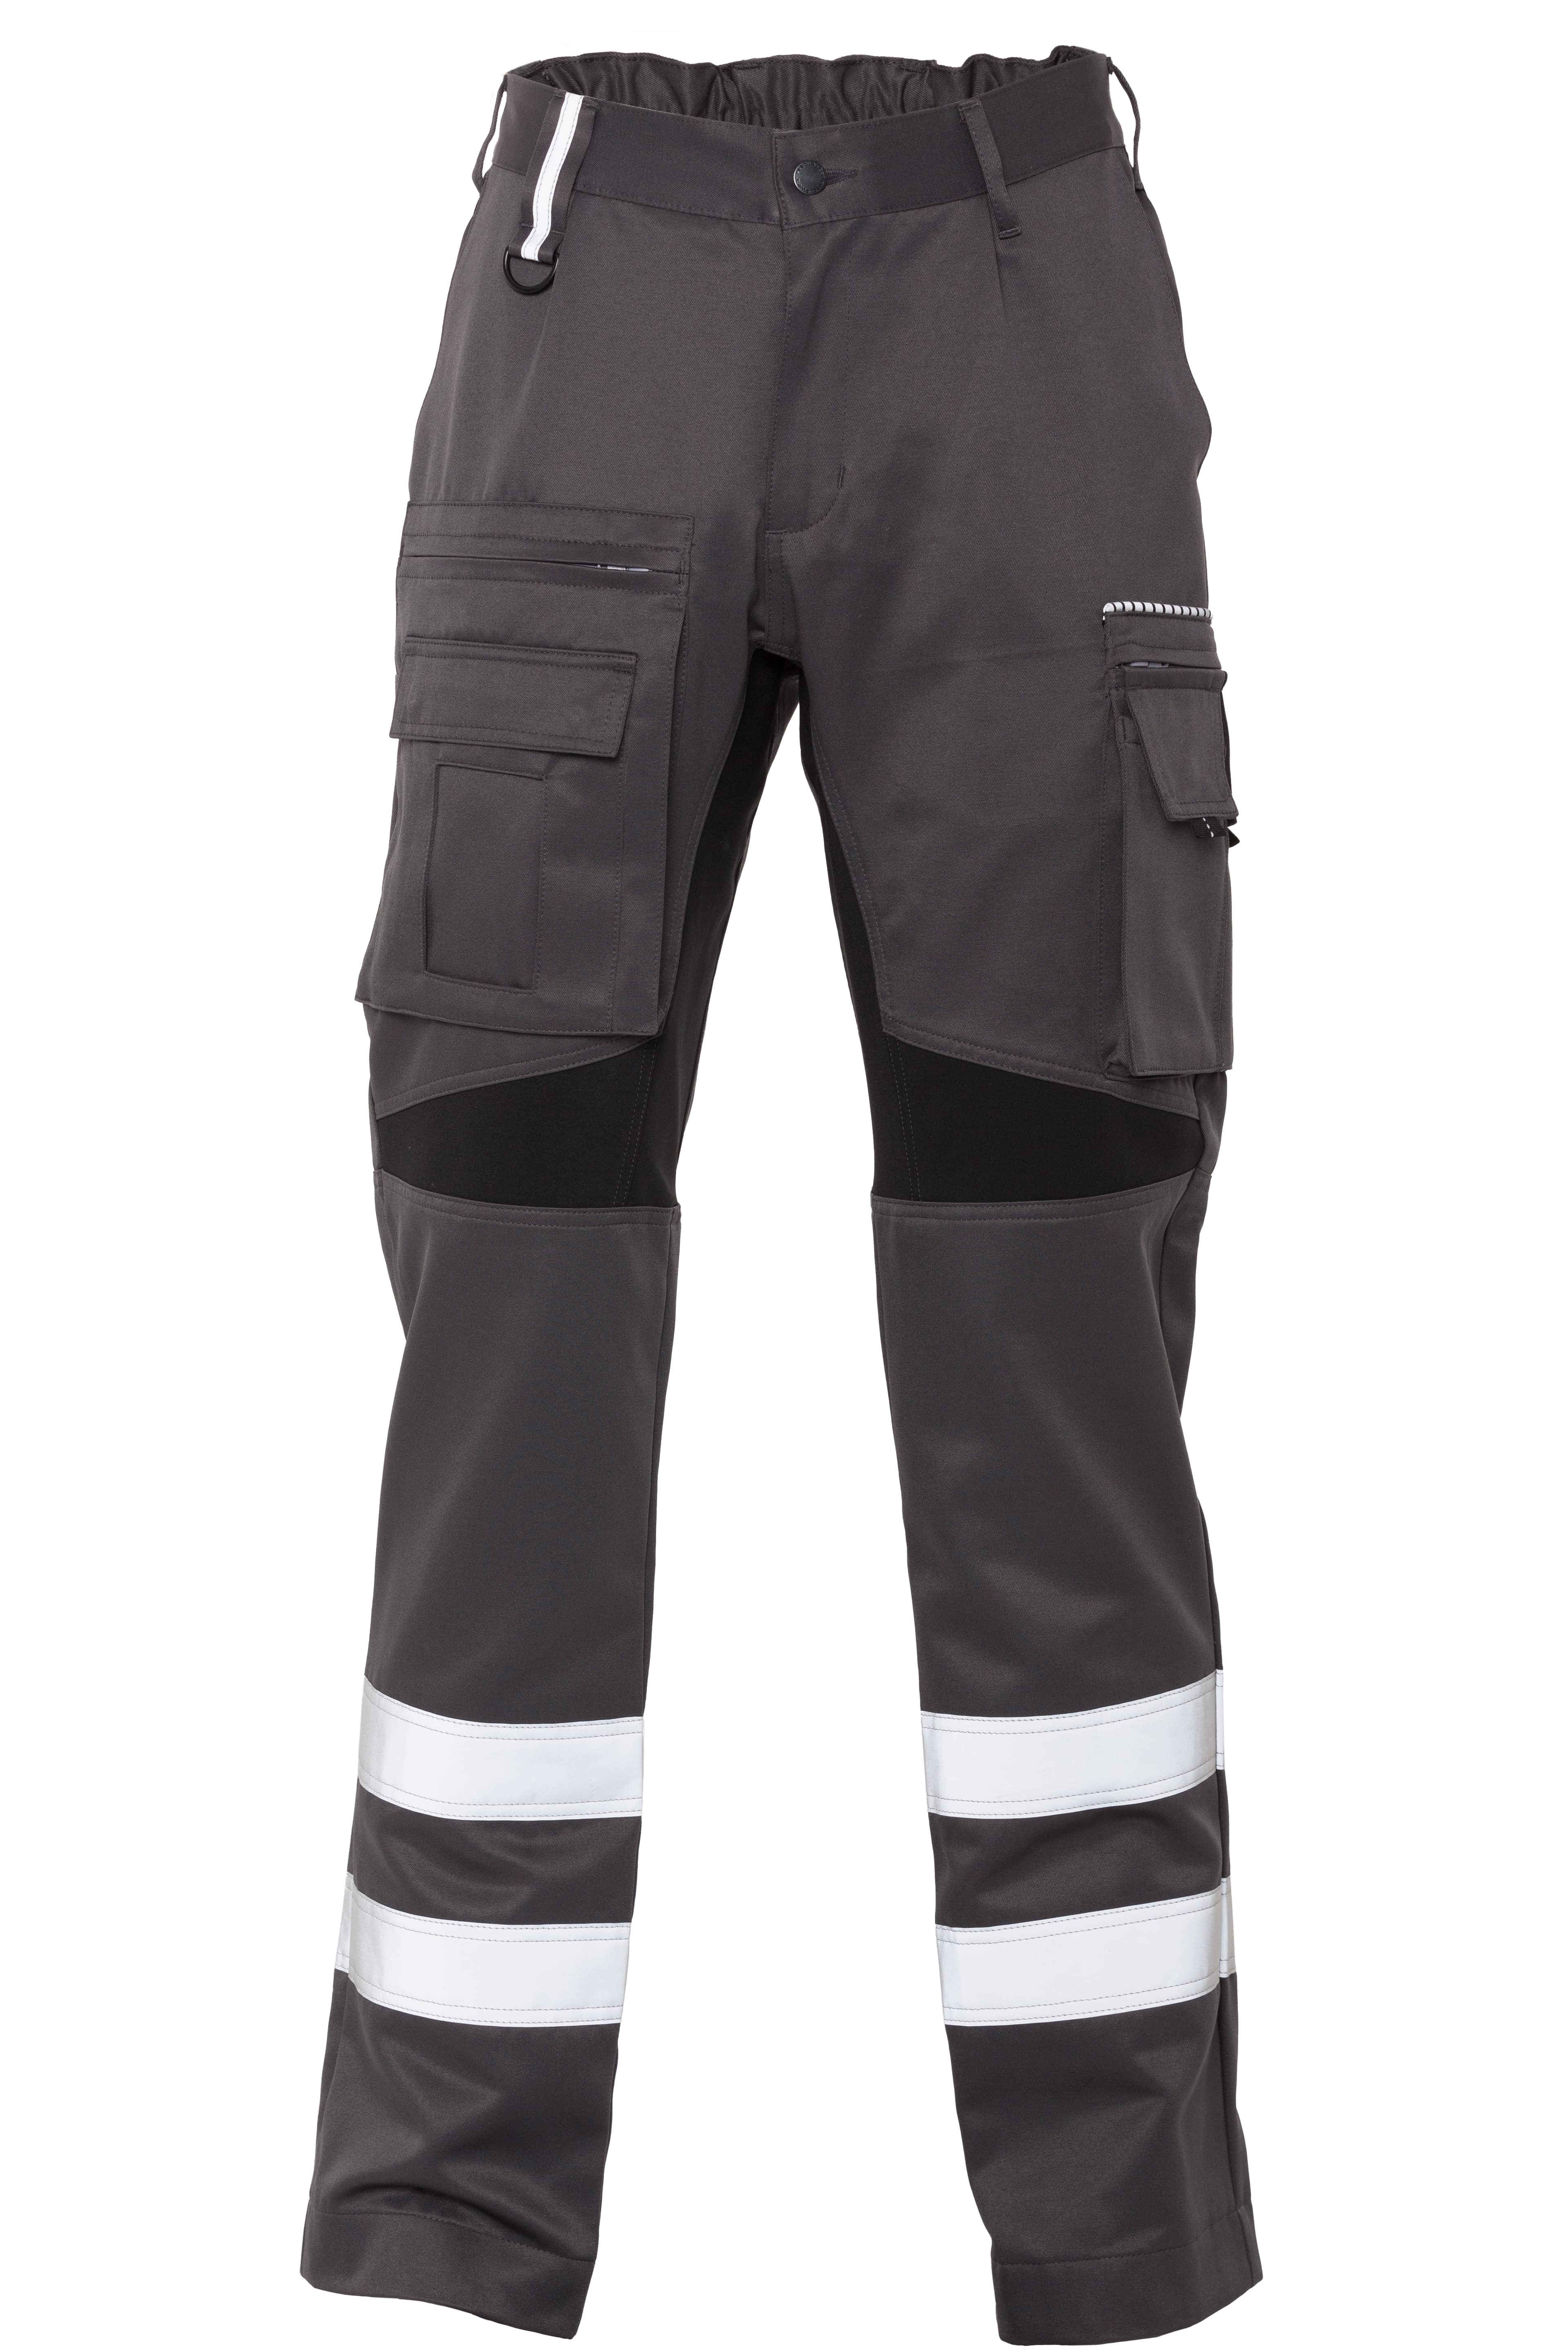 Rescuewear Unisex Hose 33406 Advanced Grau mit Stretch Schwarz (Neu!!)  - 24